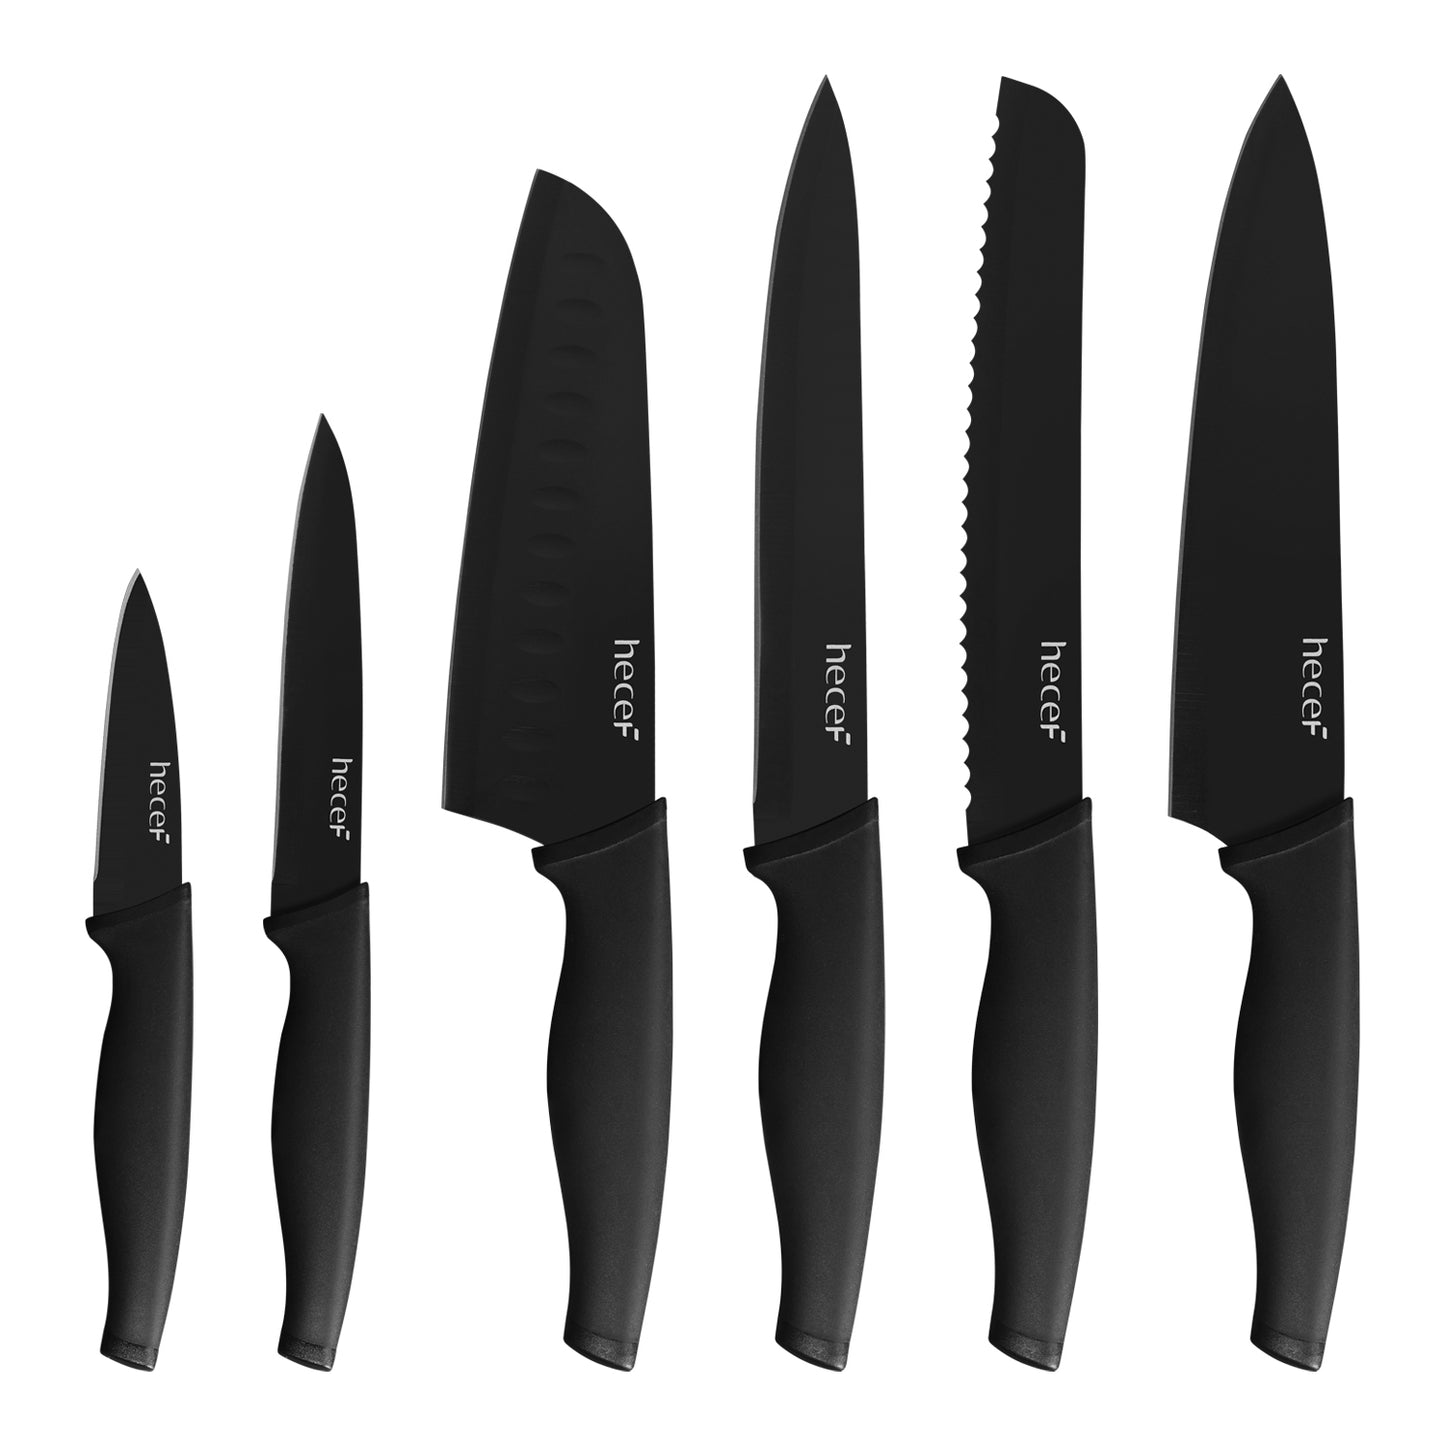 Hecef Black Oxide Knife Set of 6 with Matching Blade Protective Sheath, Black Kitchen Knife Set, Scratch Resistant & Rust Proof, Hard Stainless Steel, Non Stick Black Color Coating Blade Knives - Hecef Kitchen